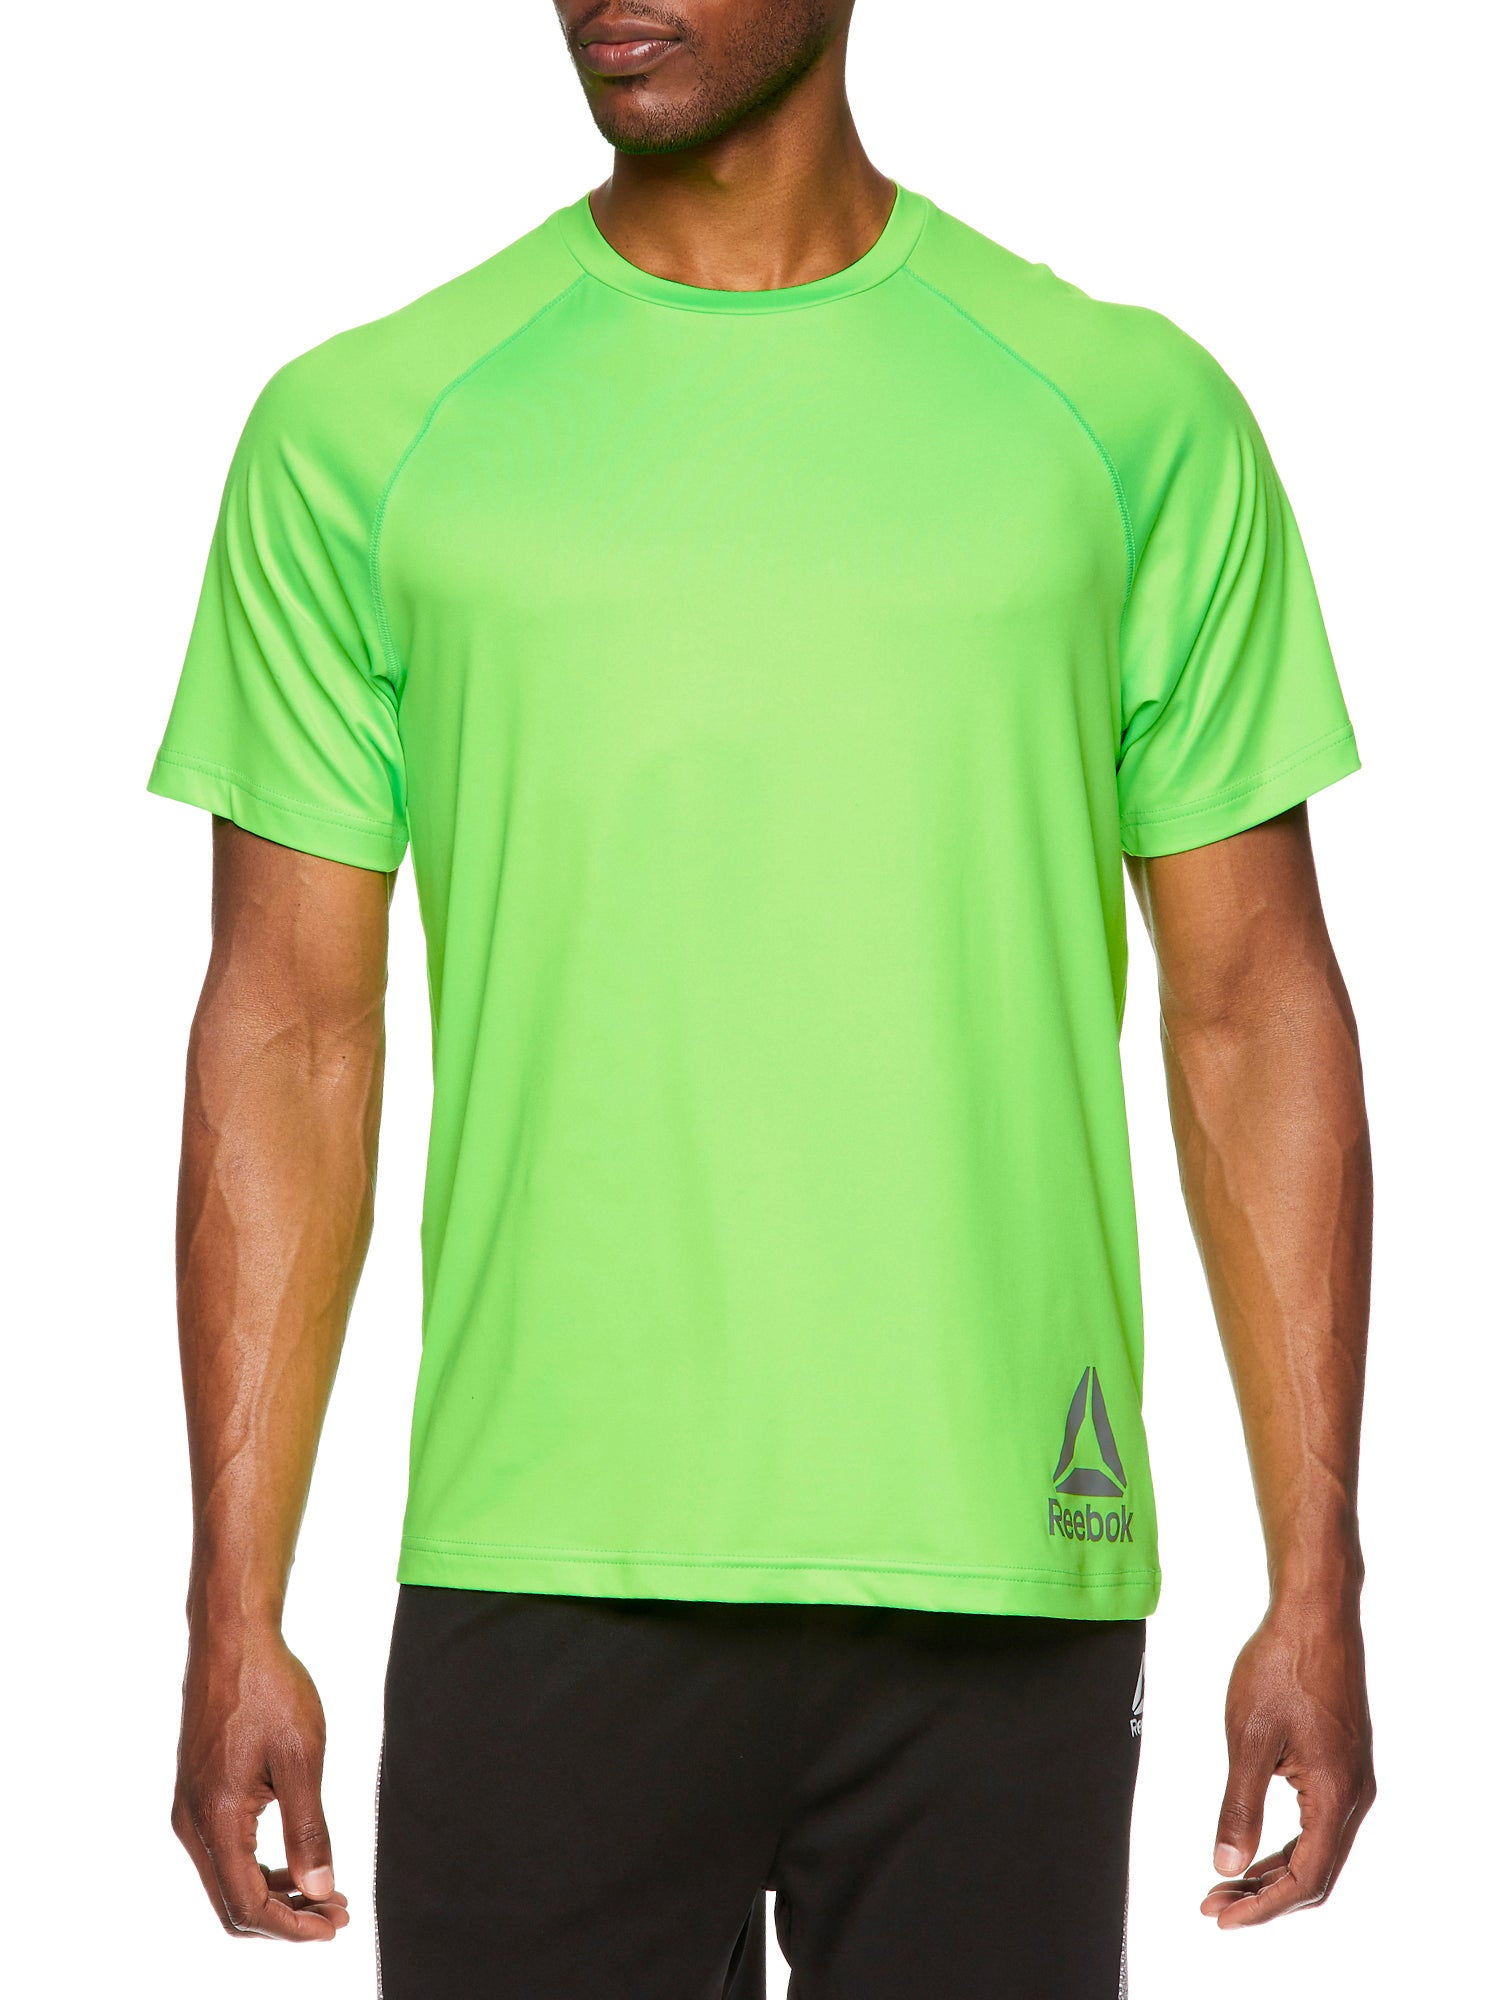 Reebok Mens T-shirt Duration Short Sleeve Performance Training Tops - Neon